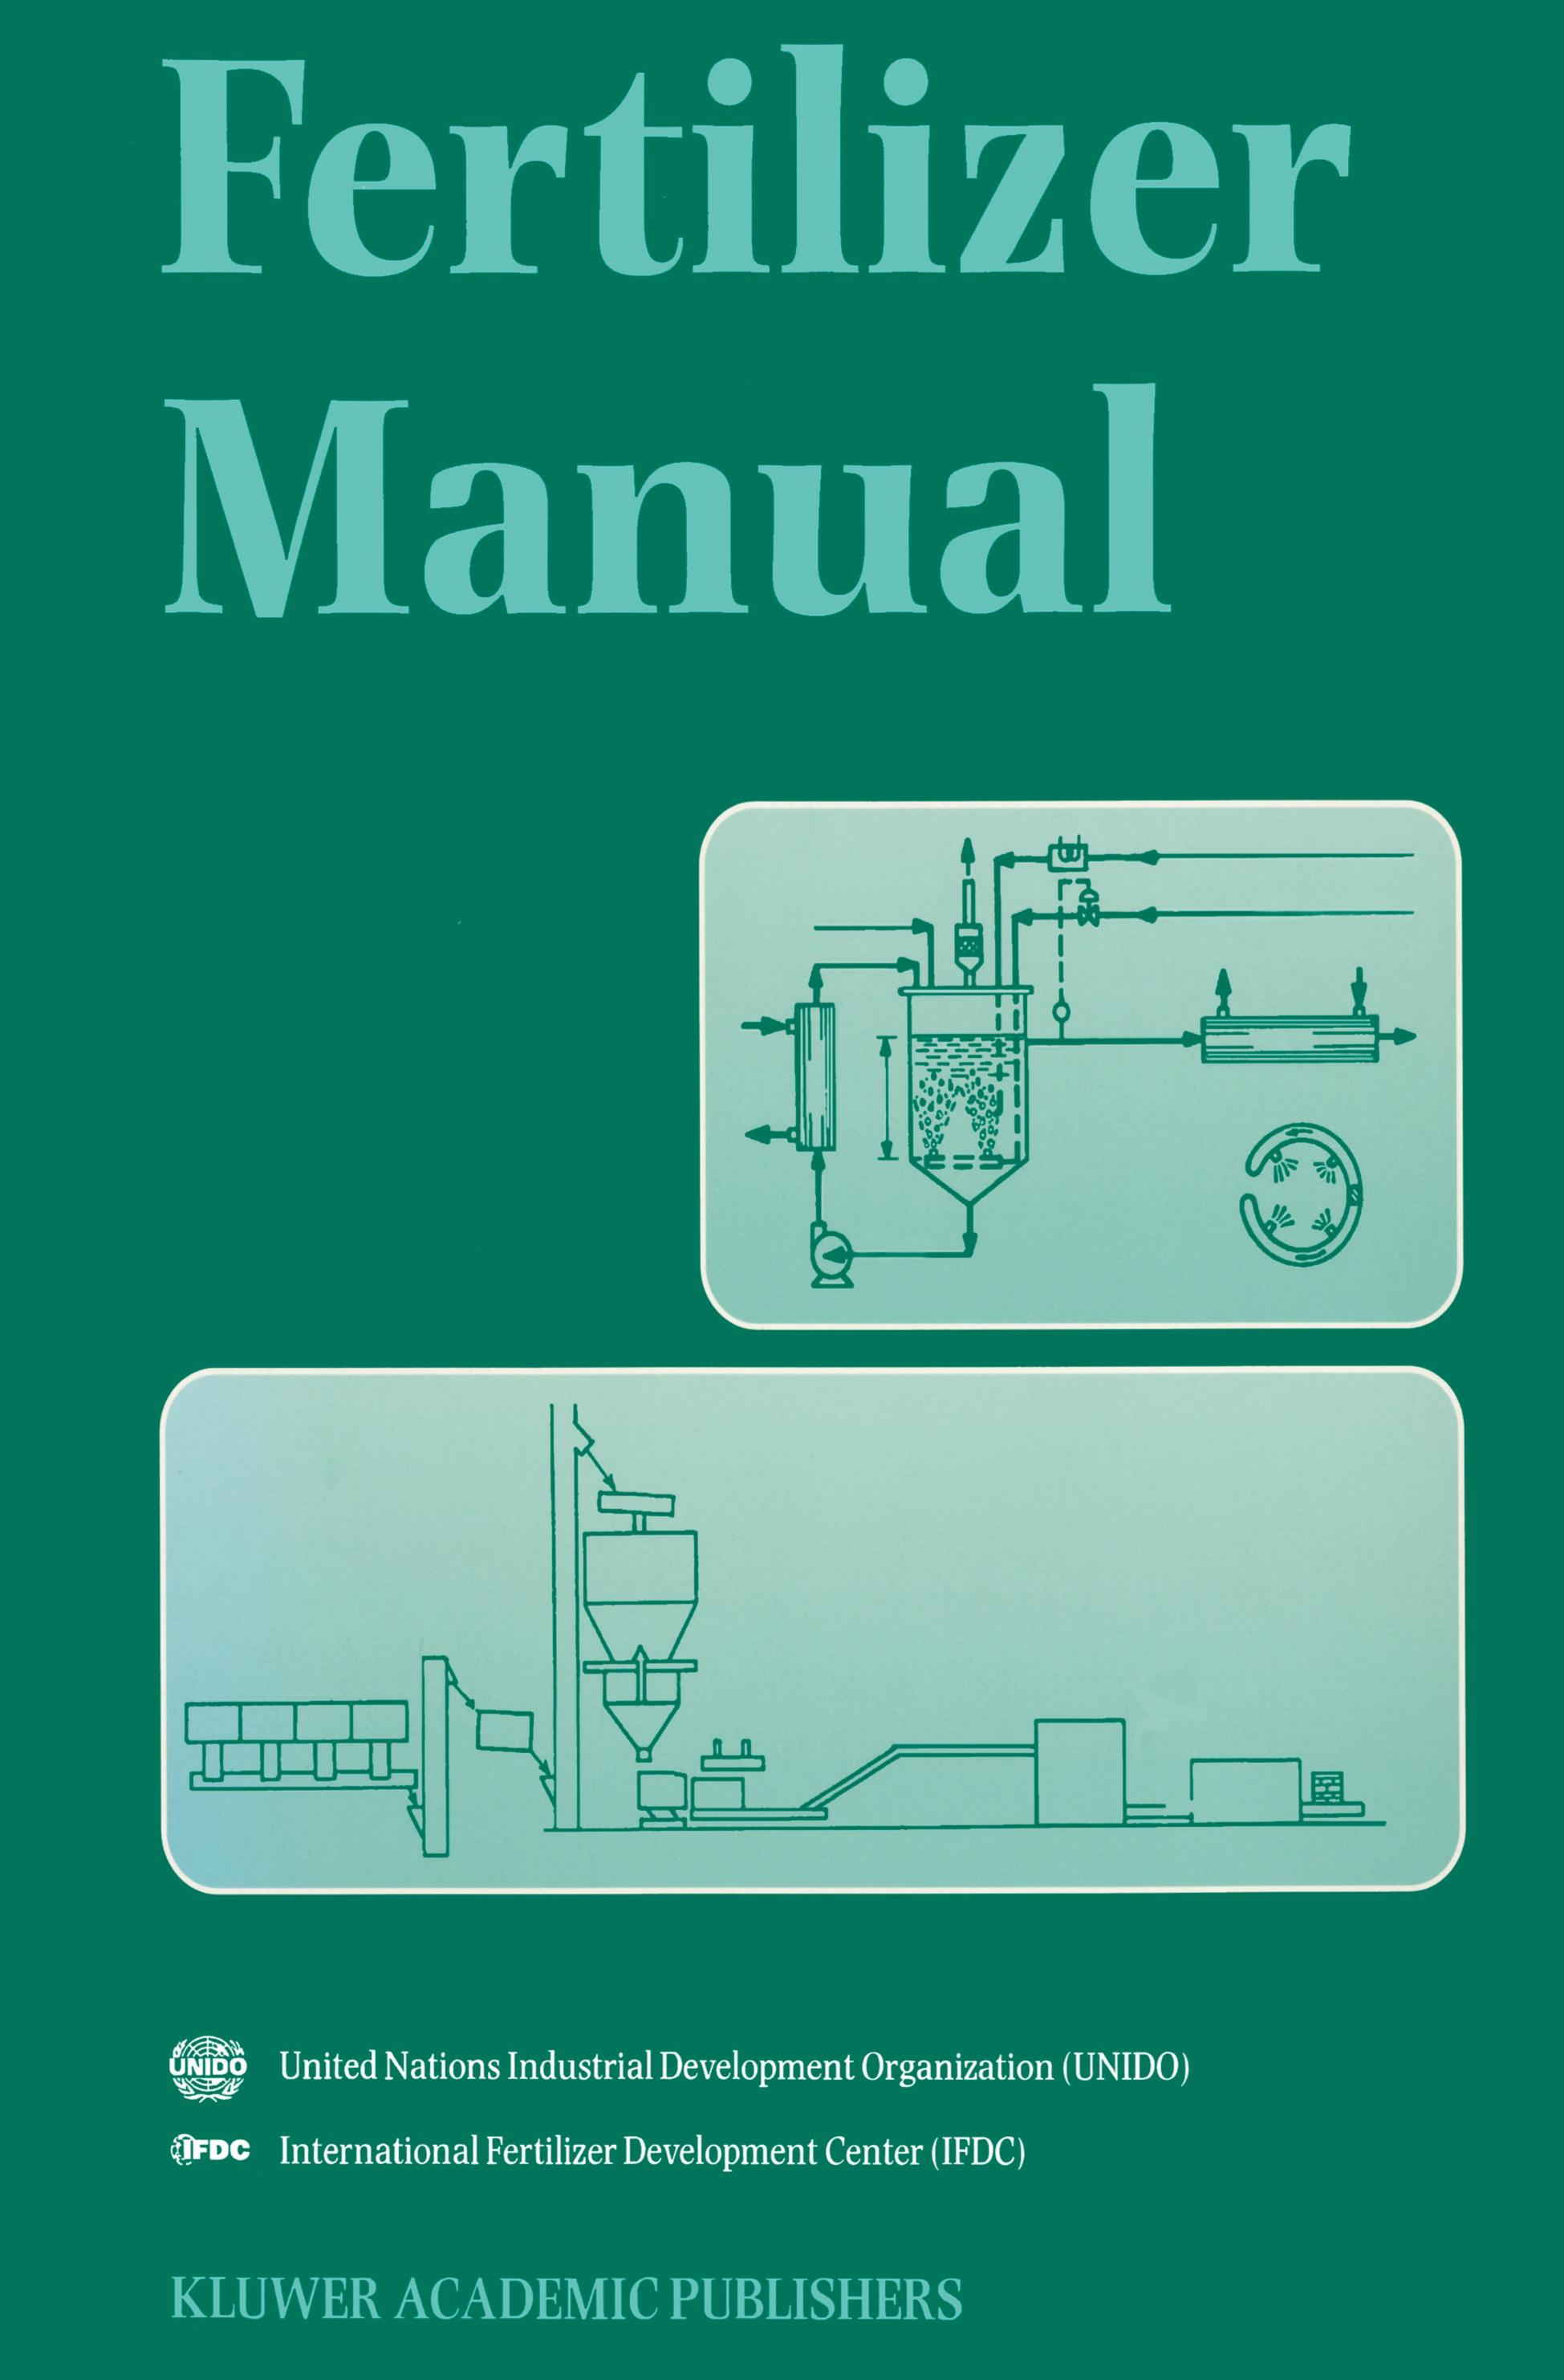 Fertilizer Manual - UN Industrial Development Organization|Int\\'l Fertilizer Development Cente